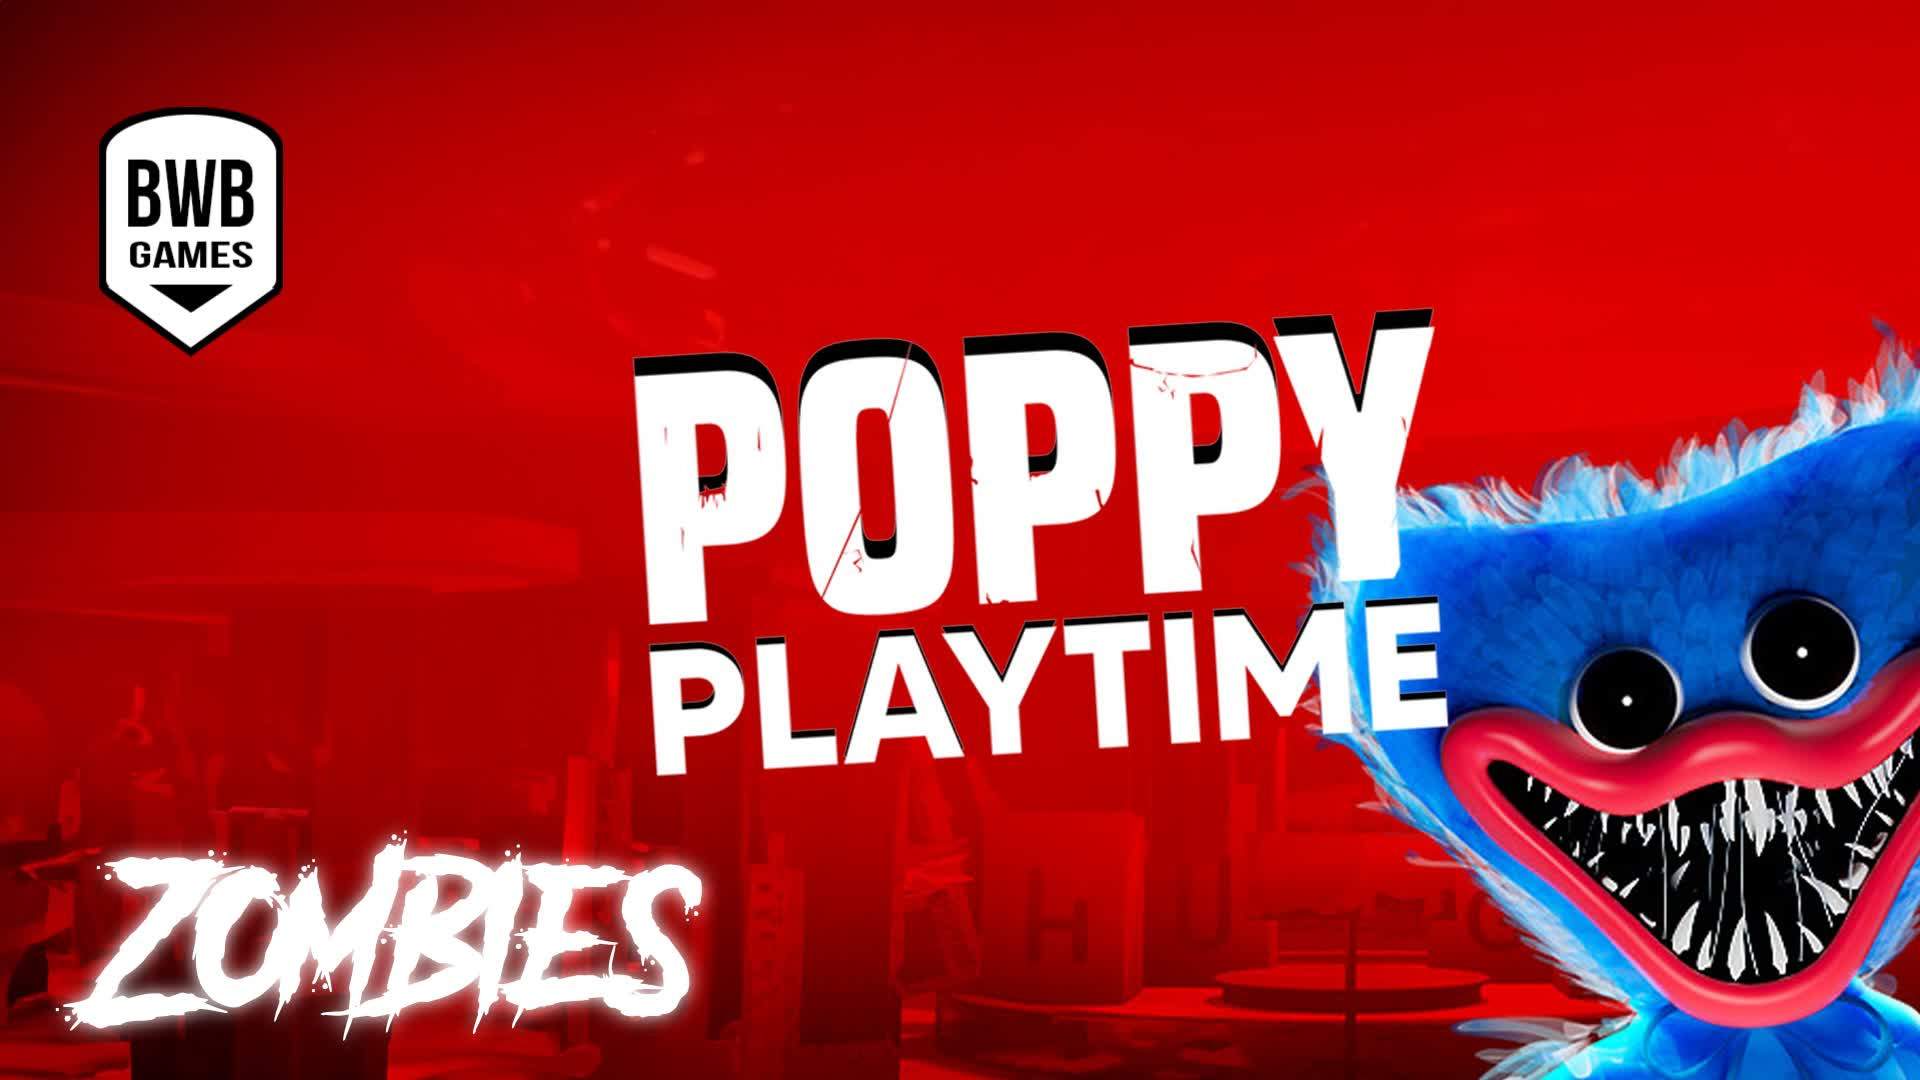 Poppy Playtime Zombies